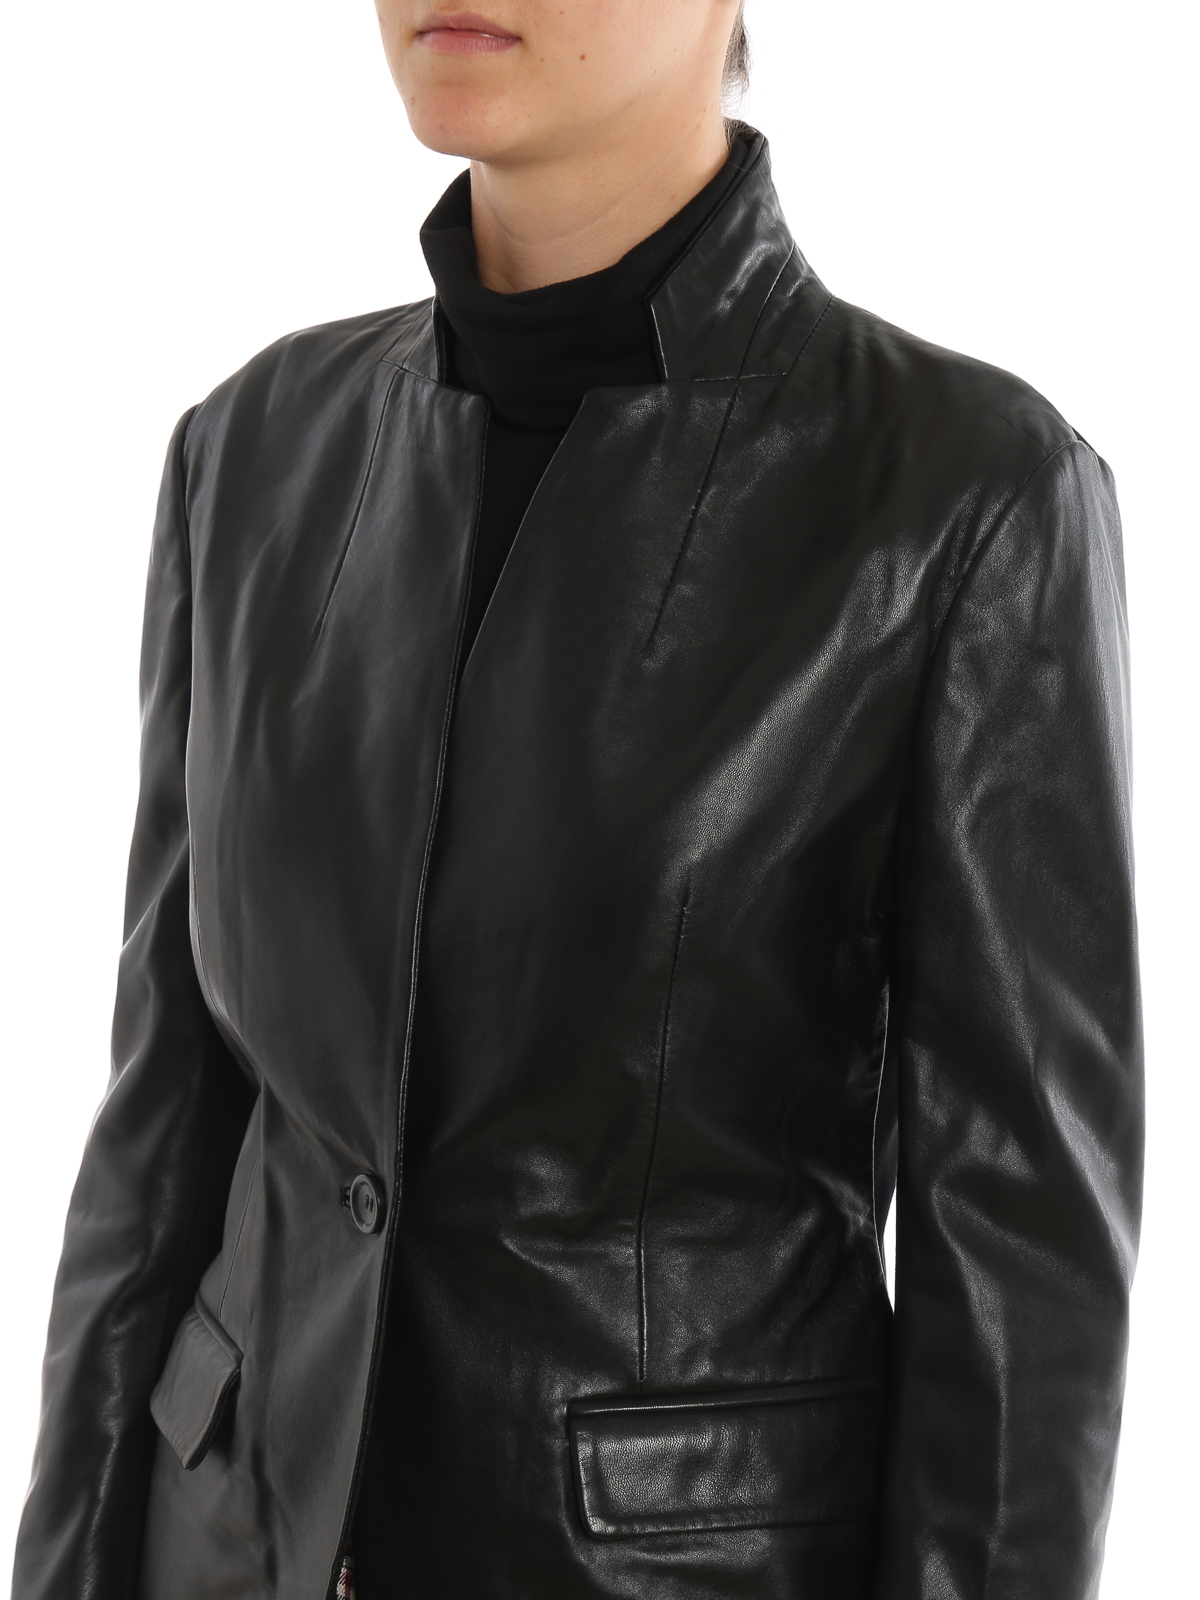 Leather jacket P.A.R.O.S.H. Maze - MAZED430758013 jacket - leather